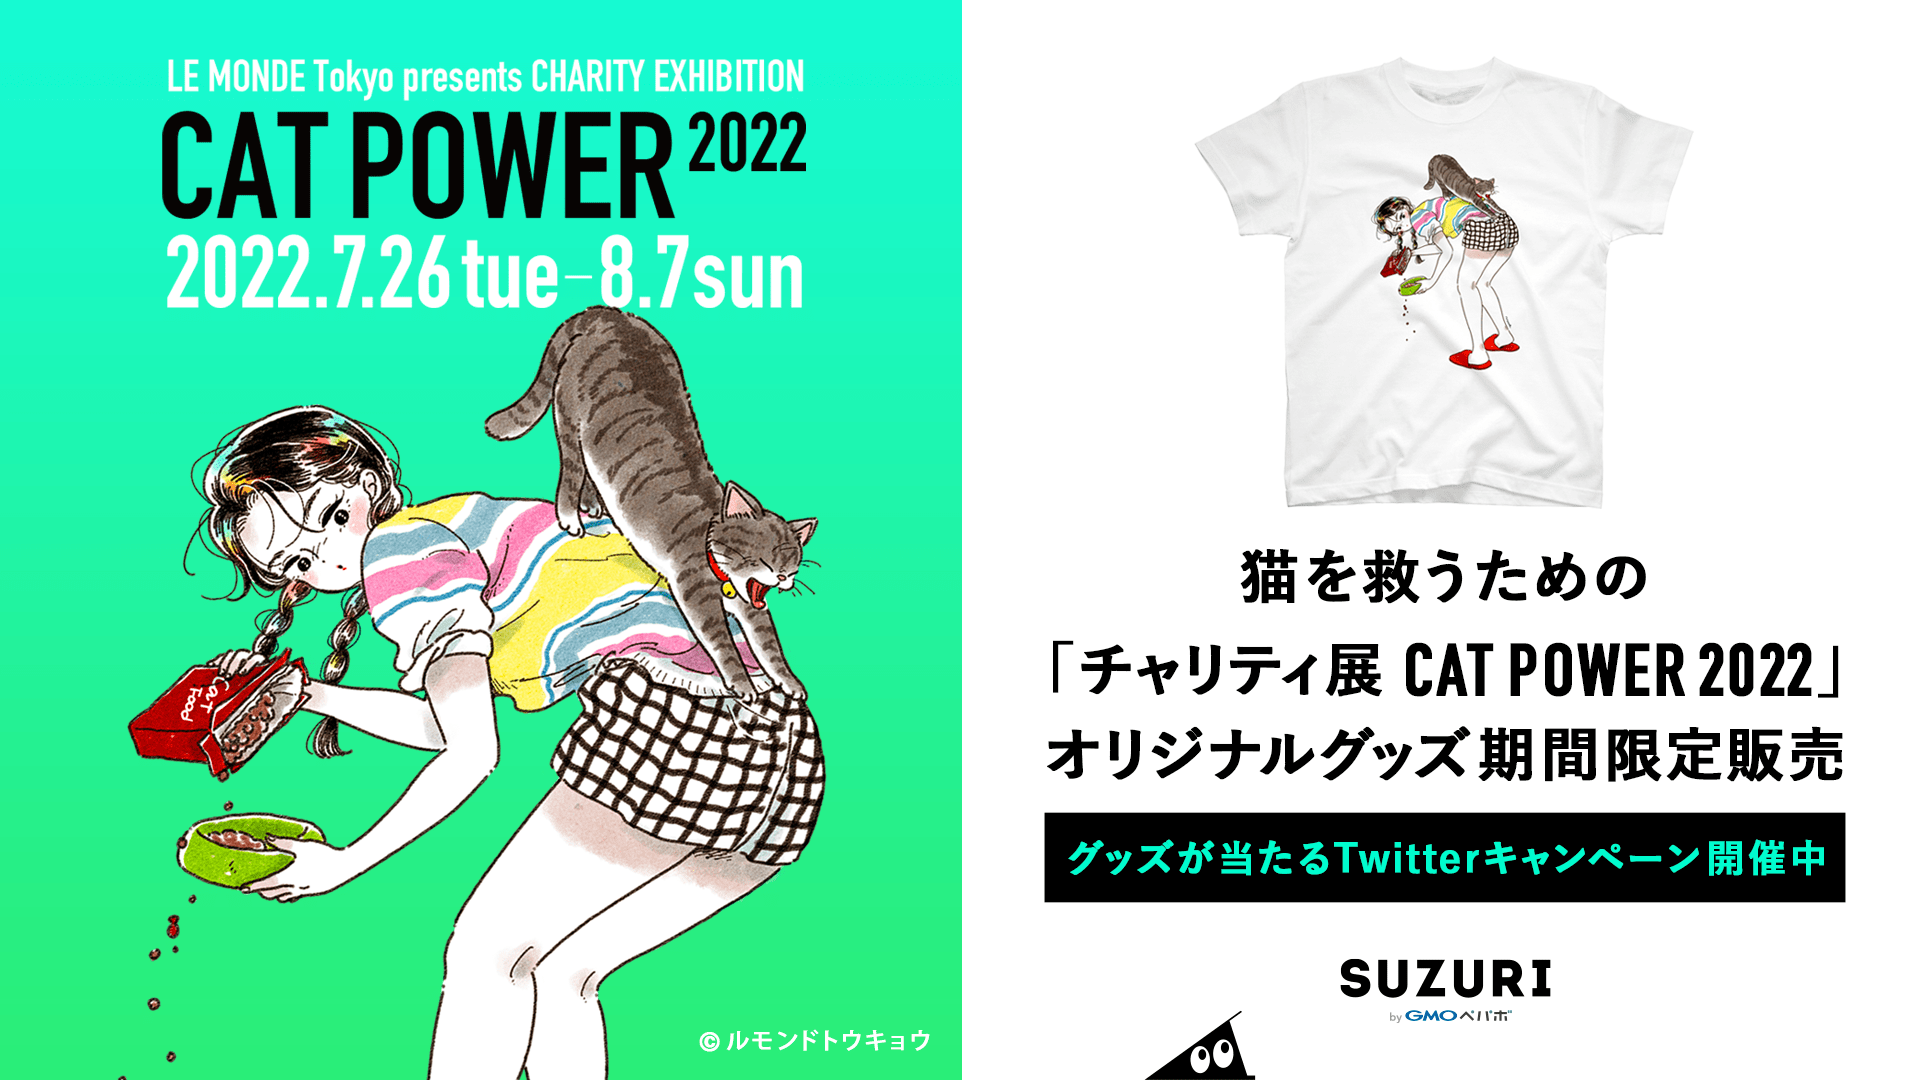 LE MONDE Tokyo Presents CHARITY EXHIBITION『CAT POWER 2022』2022年7月26日（火）〜8月7日（日） / 猫を救うための『チャリティ展 CAT POWER 2022』オリジナルグッズ期間限定販売 グッズが当たるTwitterキャンペーン開催中